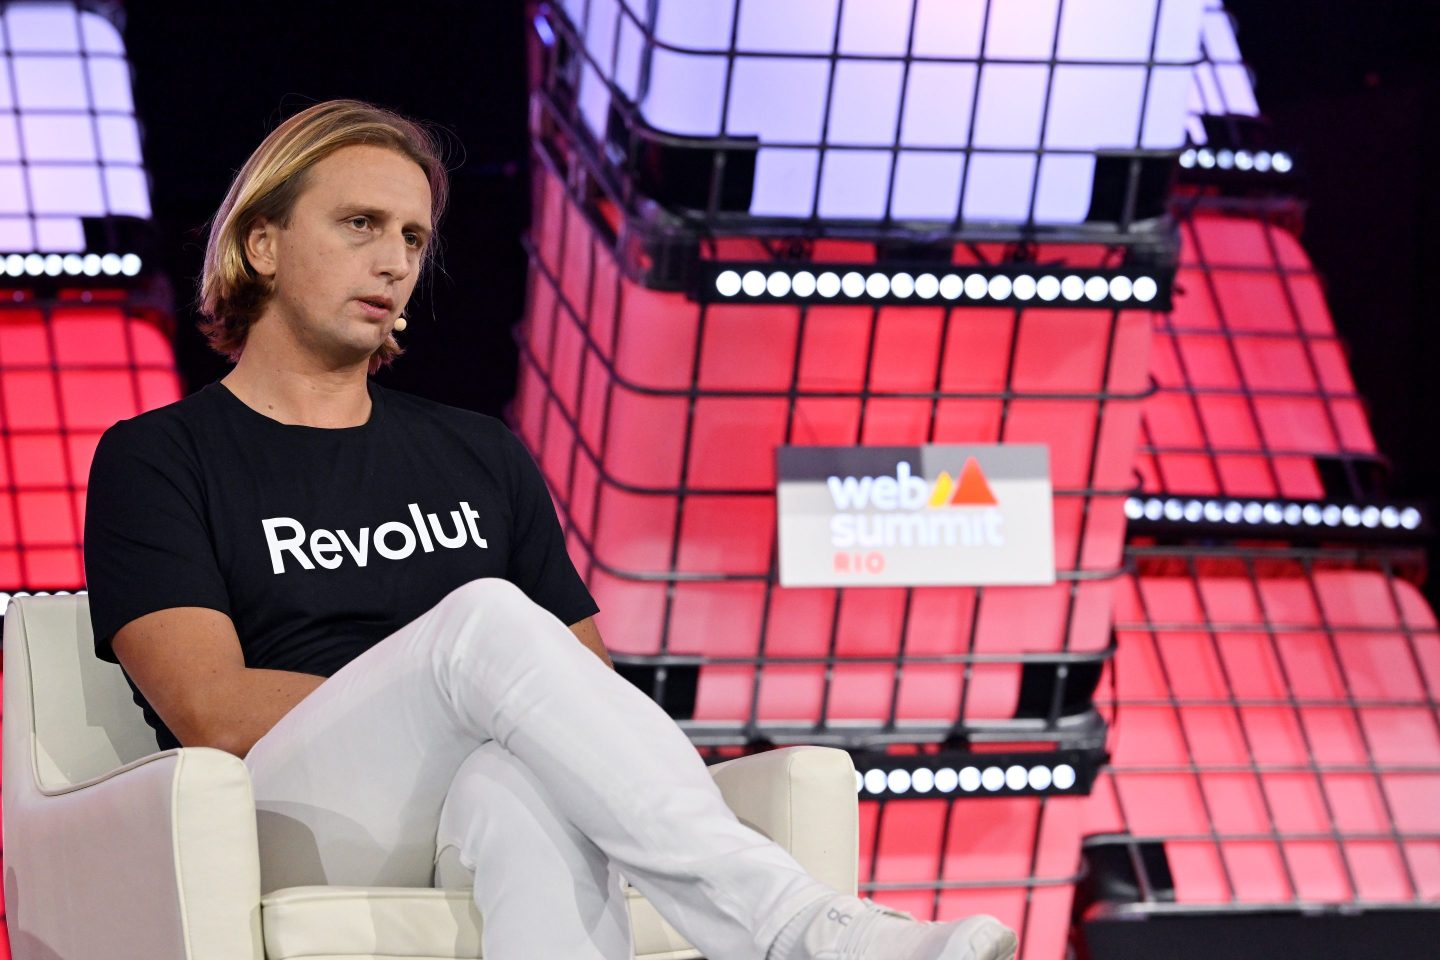 CEO and founder of Revolut, Nik Storonsky